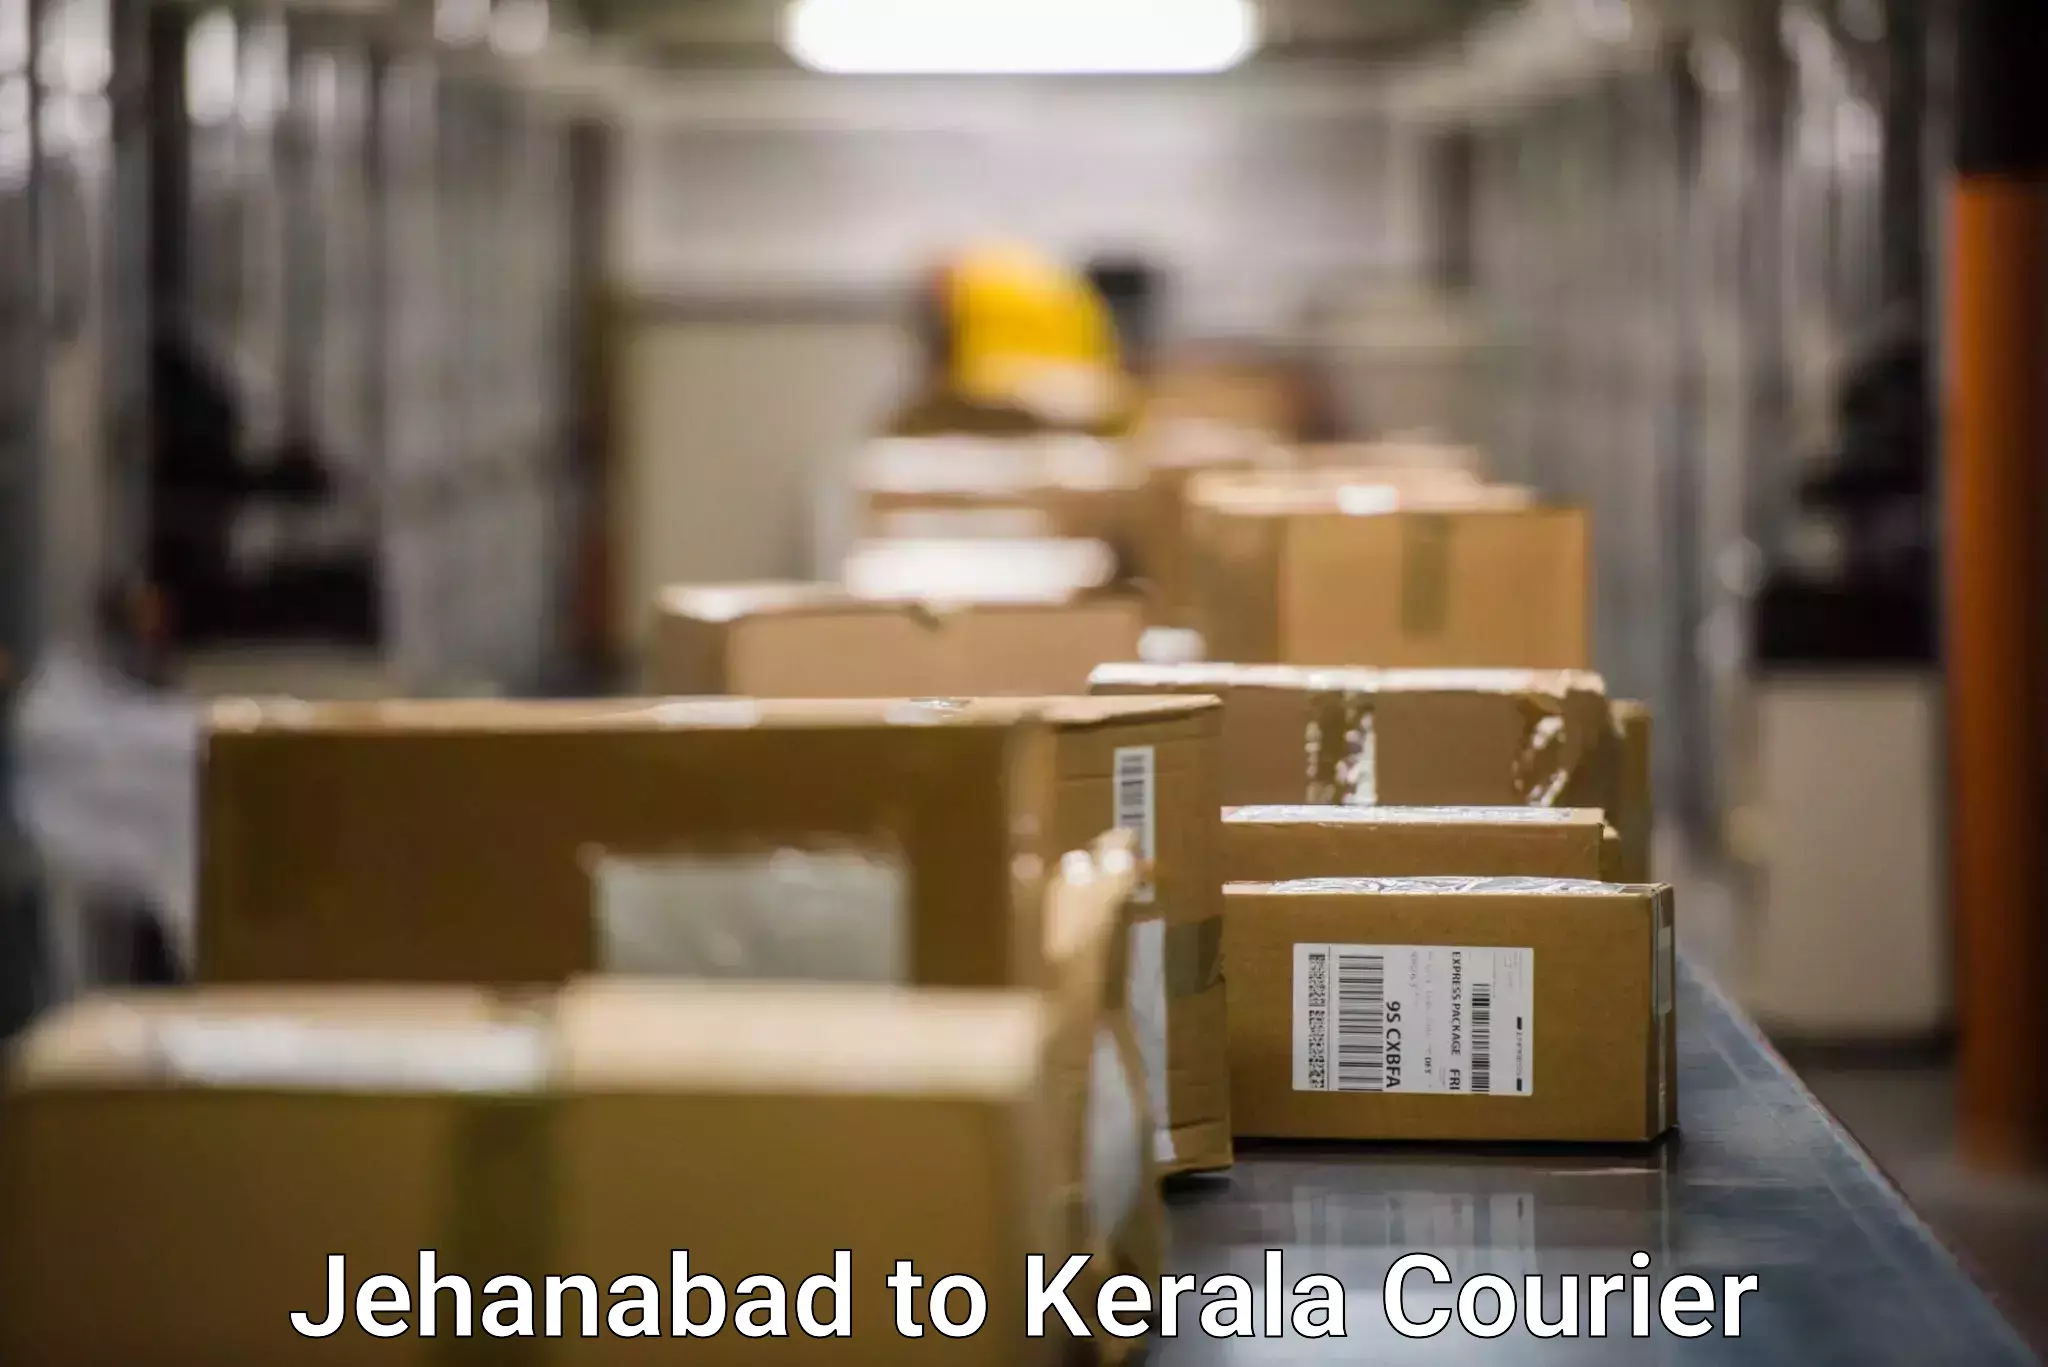 Seamless shipping experience Jehanabad to Kozhikode